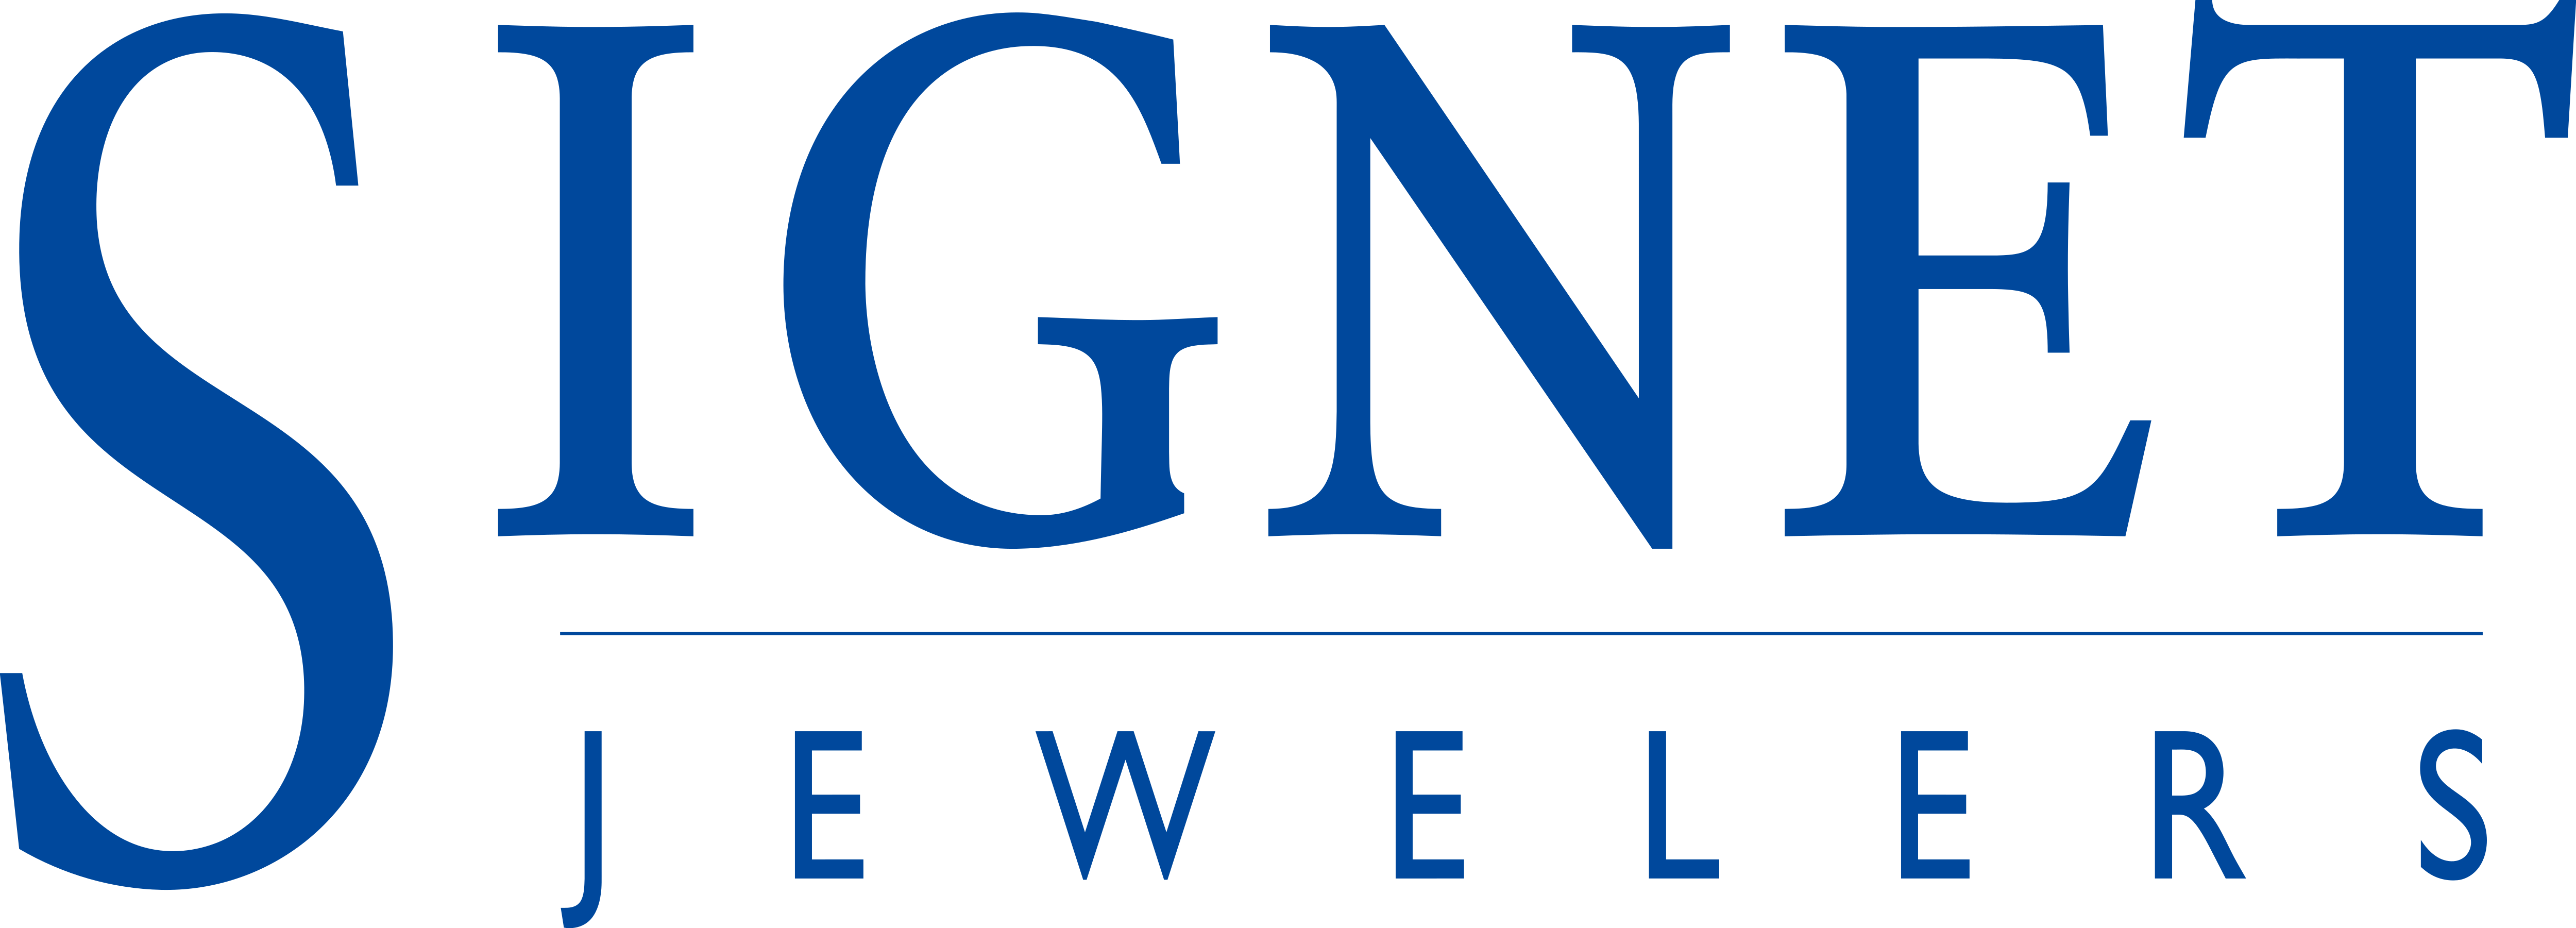 Signet Logo - Signet Jewelers